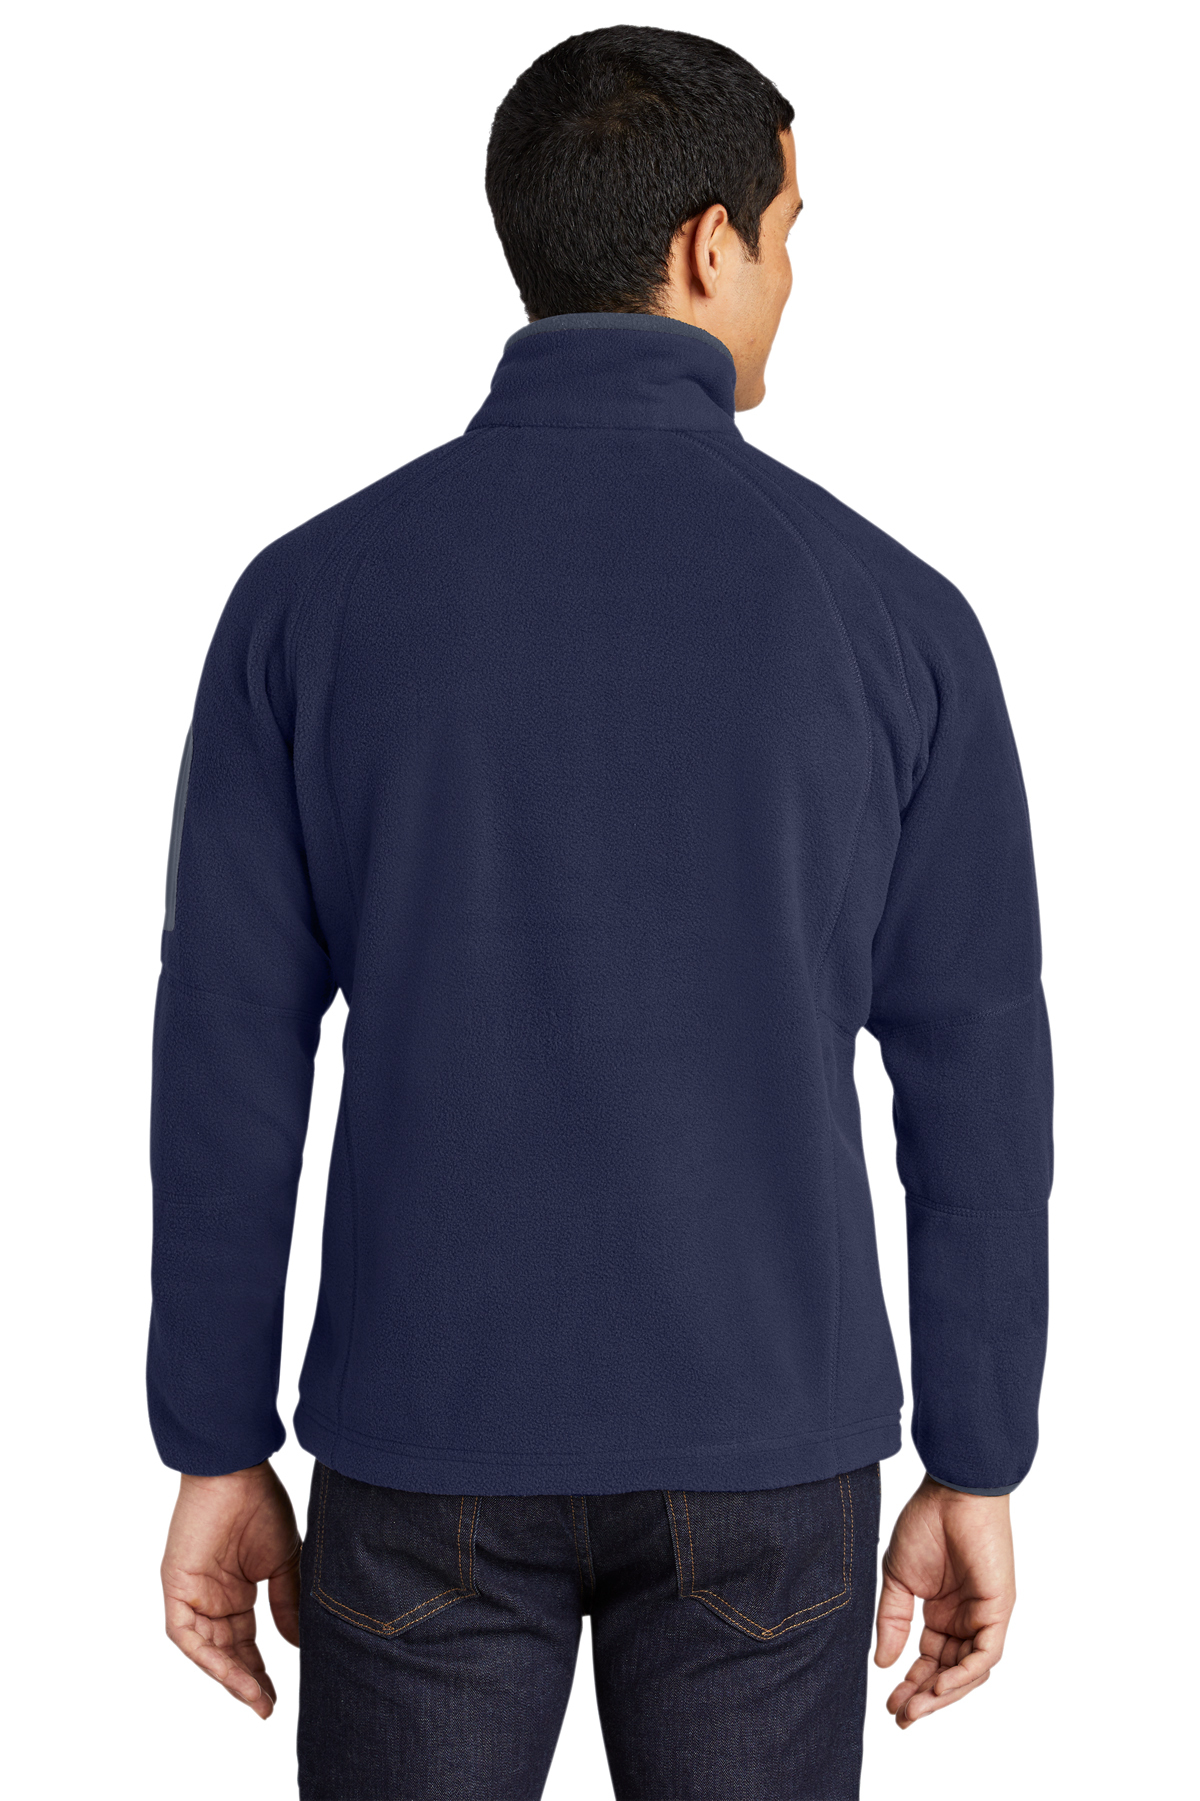 Port Authority Enhanced Value Fleece Full-Zip Jacket, Product